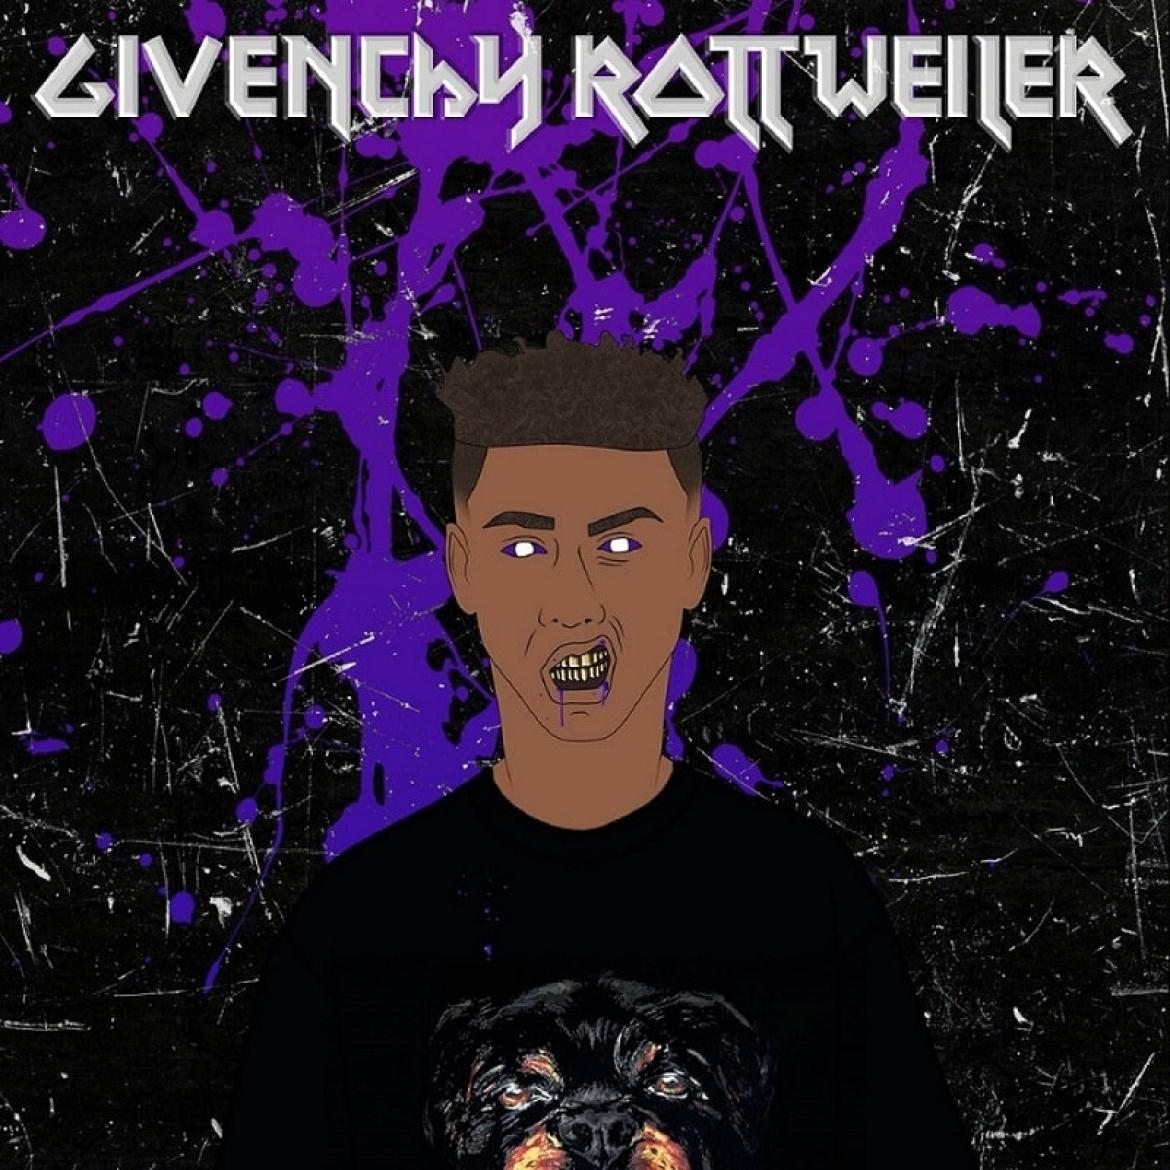 Halfcastromeo - Givenchy Rottweiler